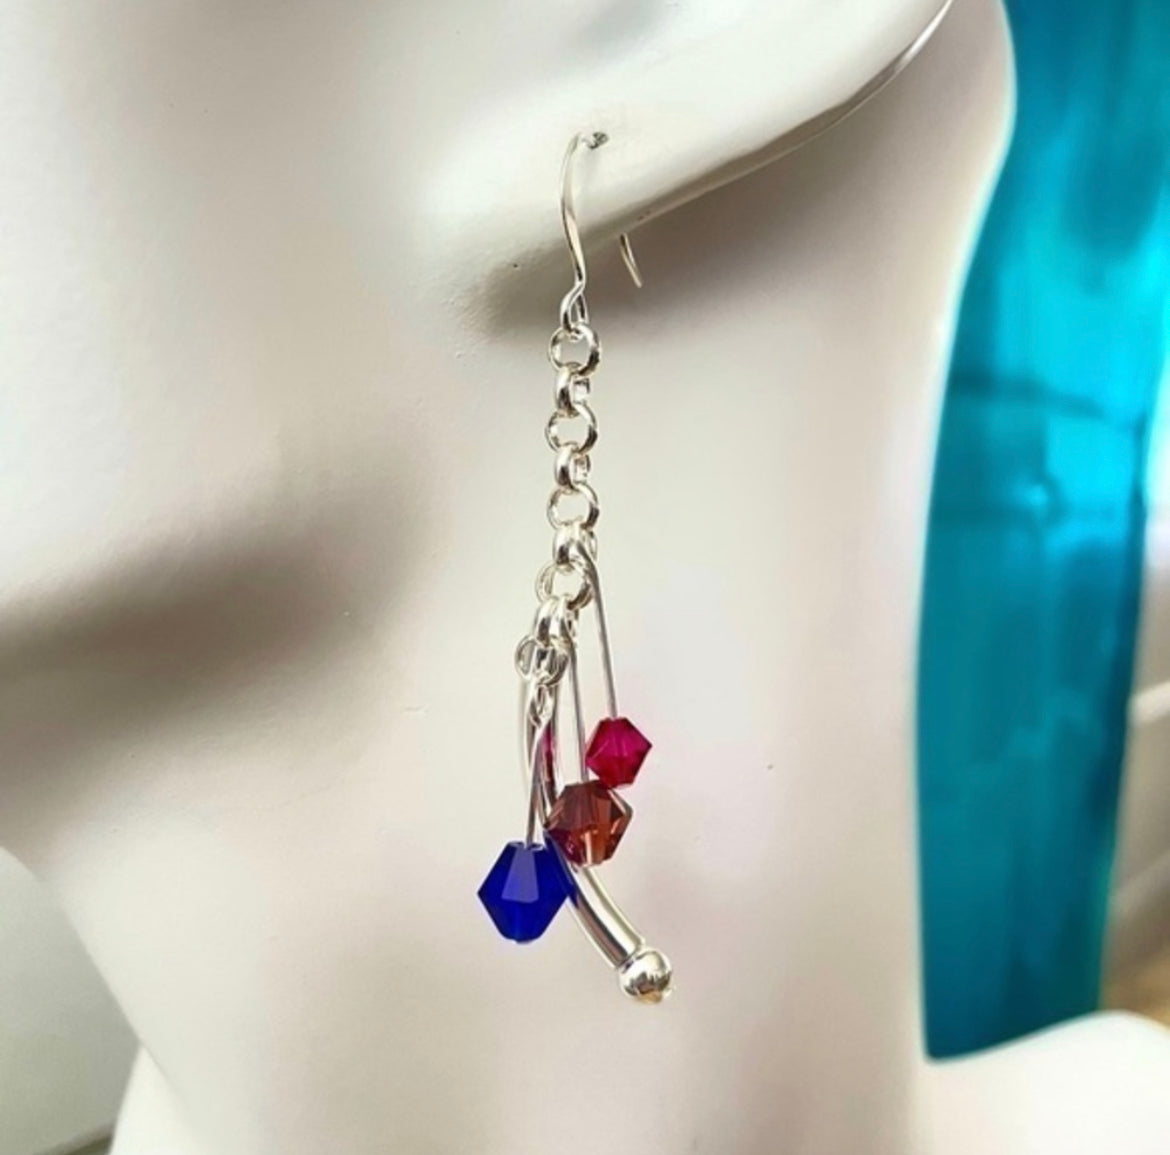 Swarovski Crystal & Curved Bar Dangle Earrings 2.5" Bi Flag Pink Purple Blue Ally Pride LGBTQIA Colorful Sparkle Glam